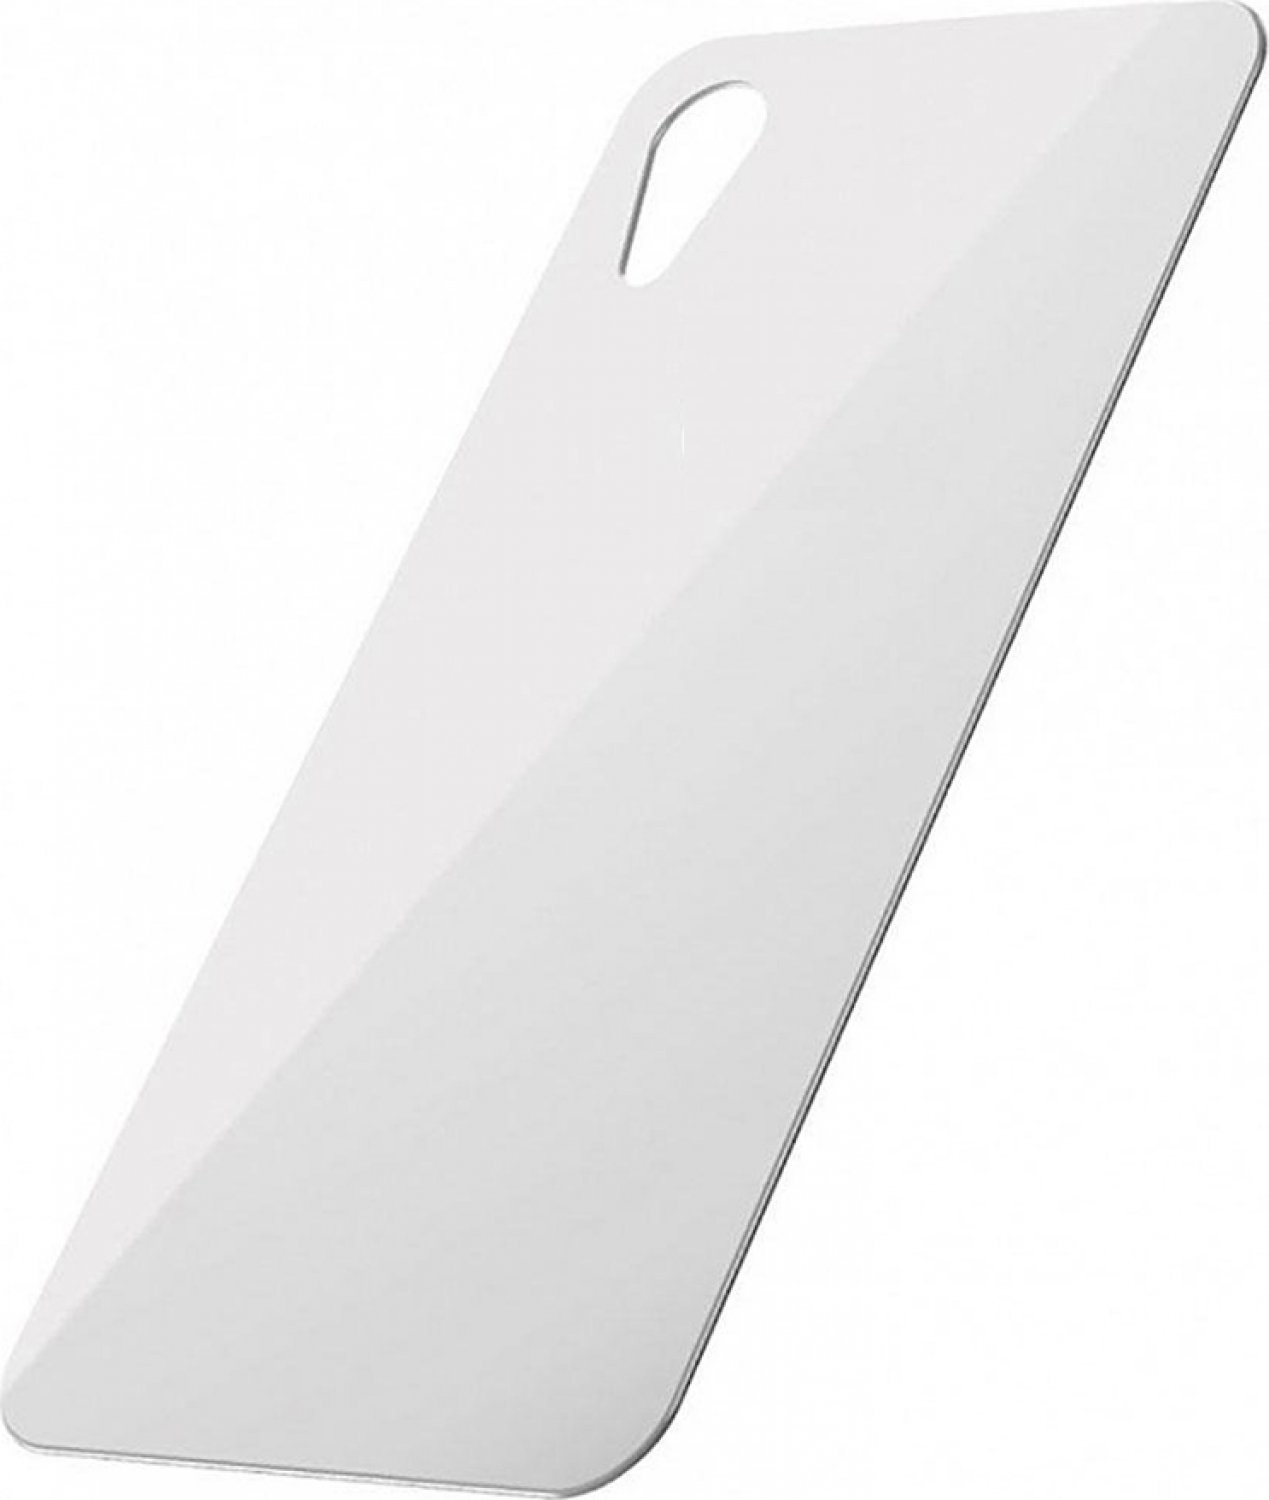 Защитное стекло для iPhone XR задняя White Техпакет 6D